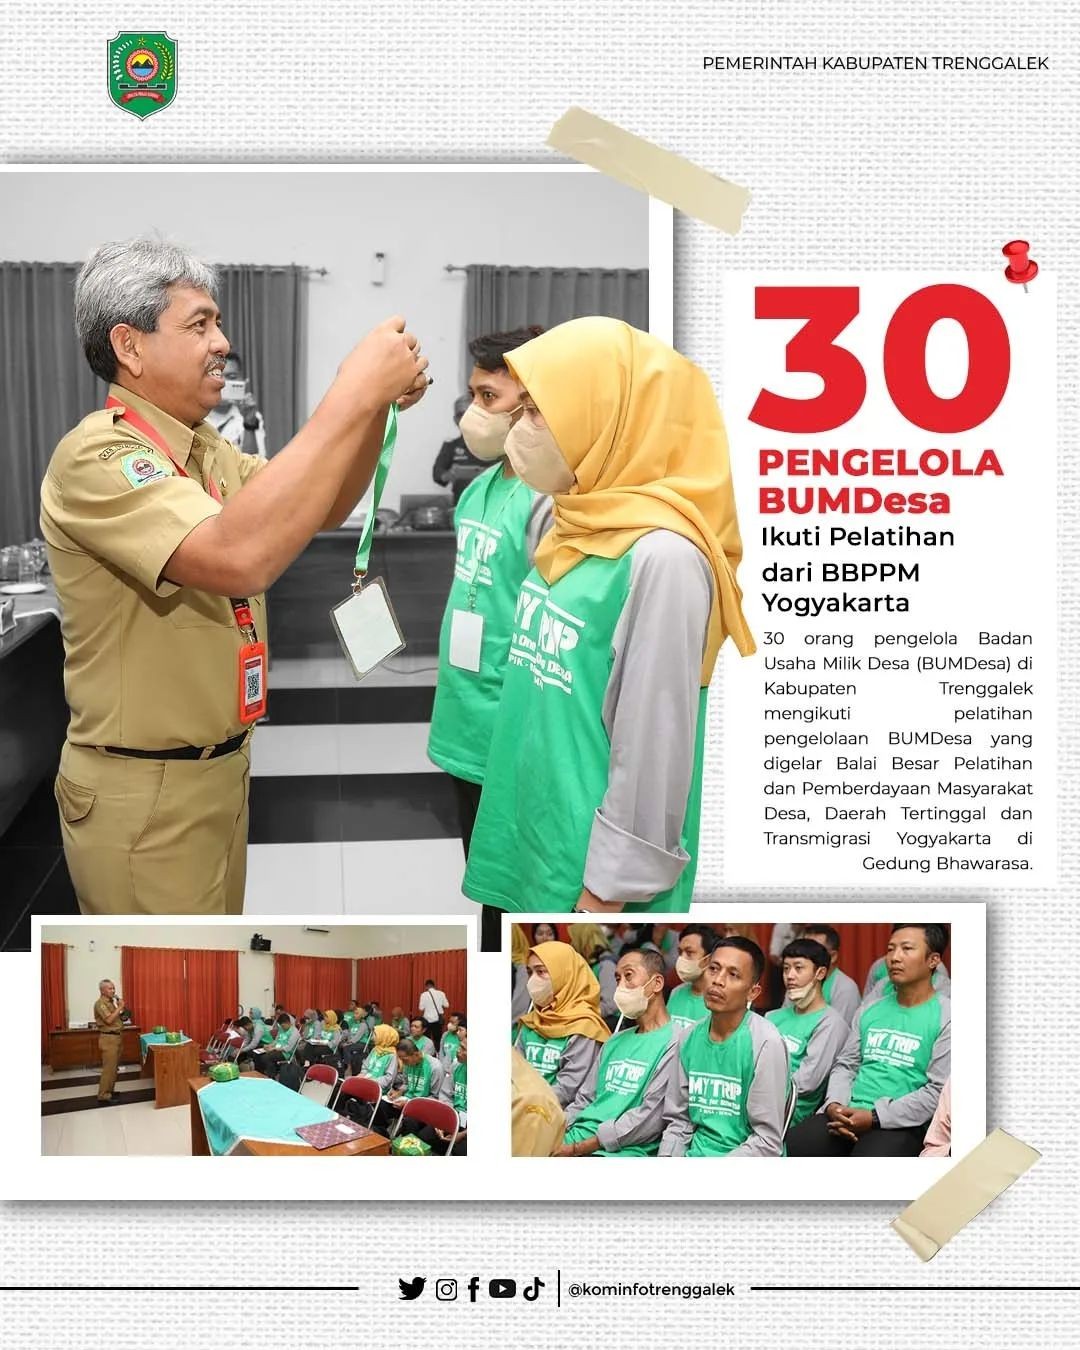 30 Pengelola BUMDesa Ikuti Pelatihan dari BBPPM Yogyakarta